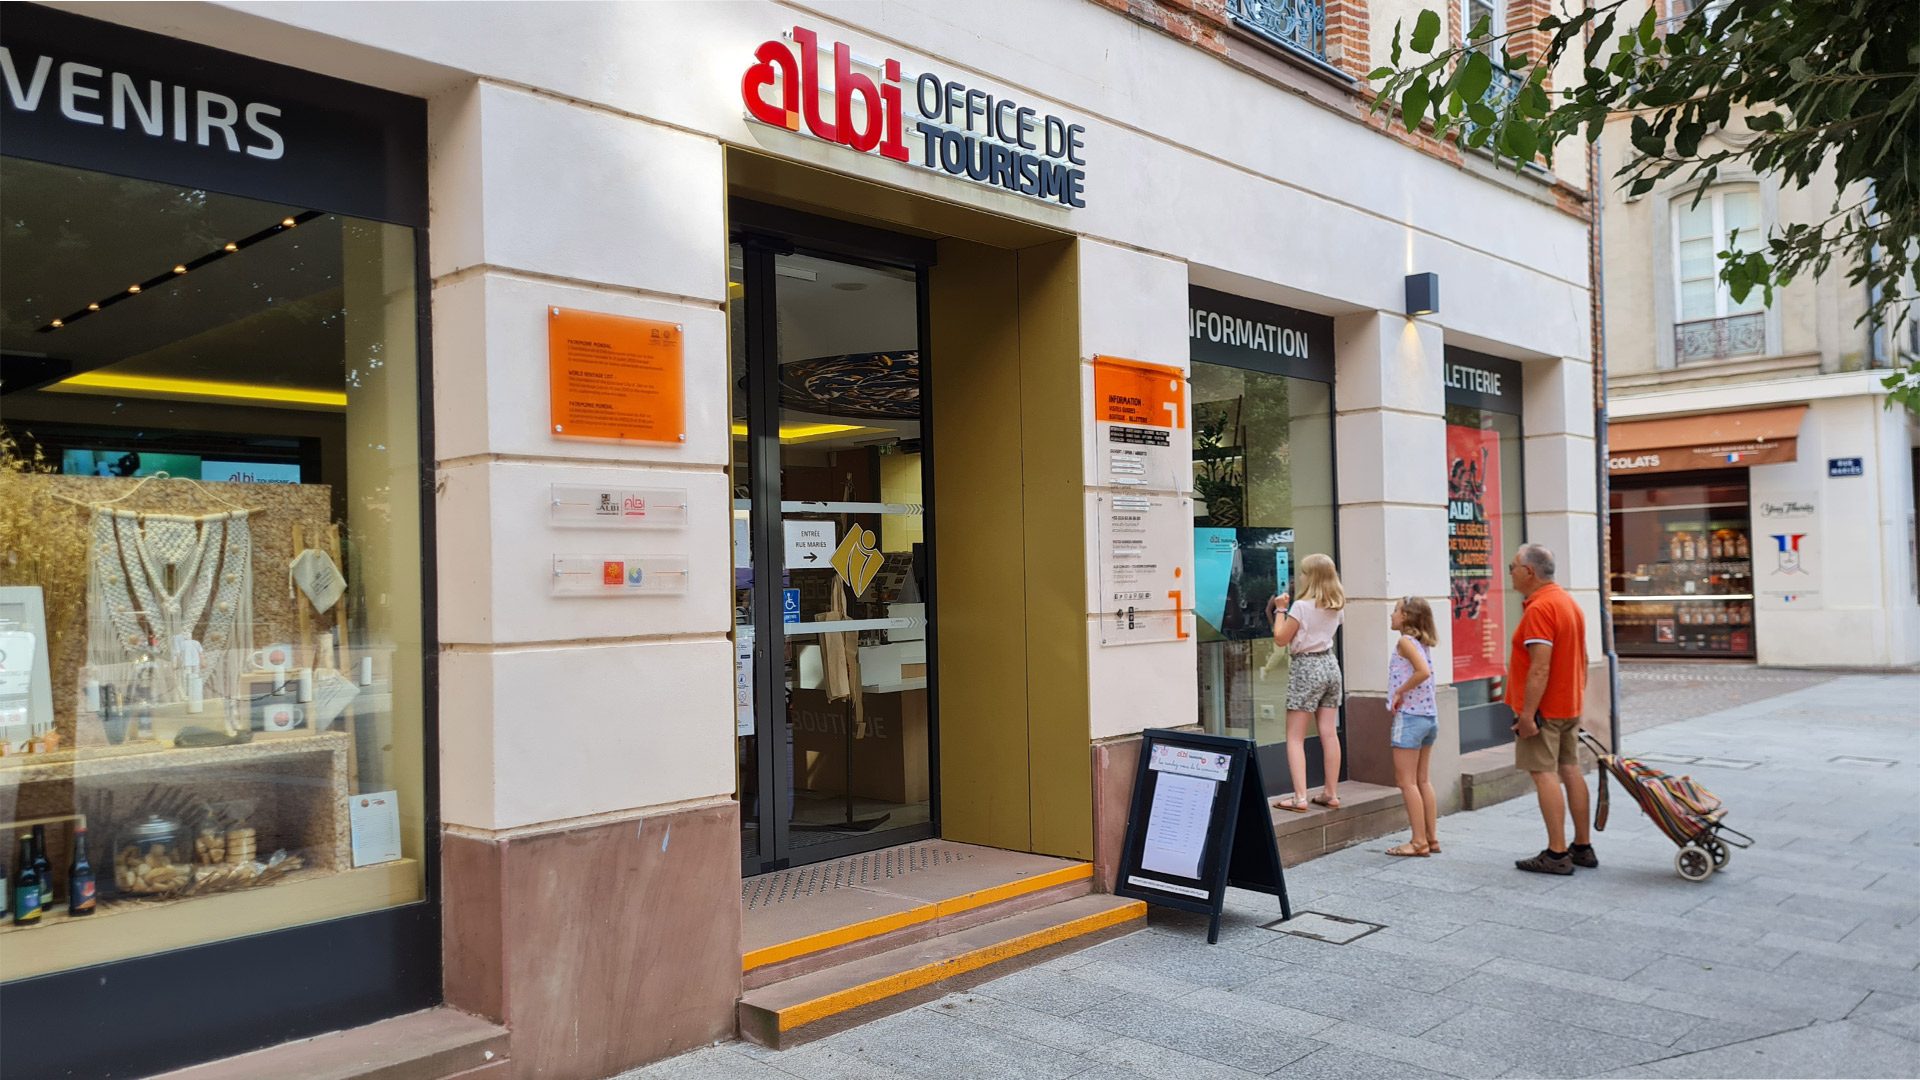 Albi Tourist Office destination expert: advice, ticketing, guided tours, shop